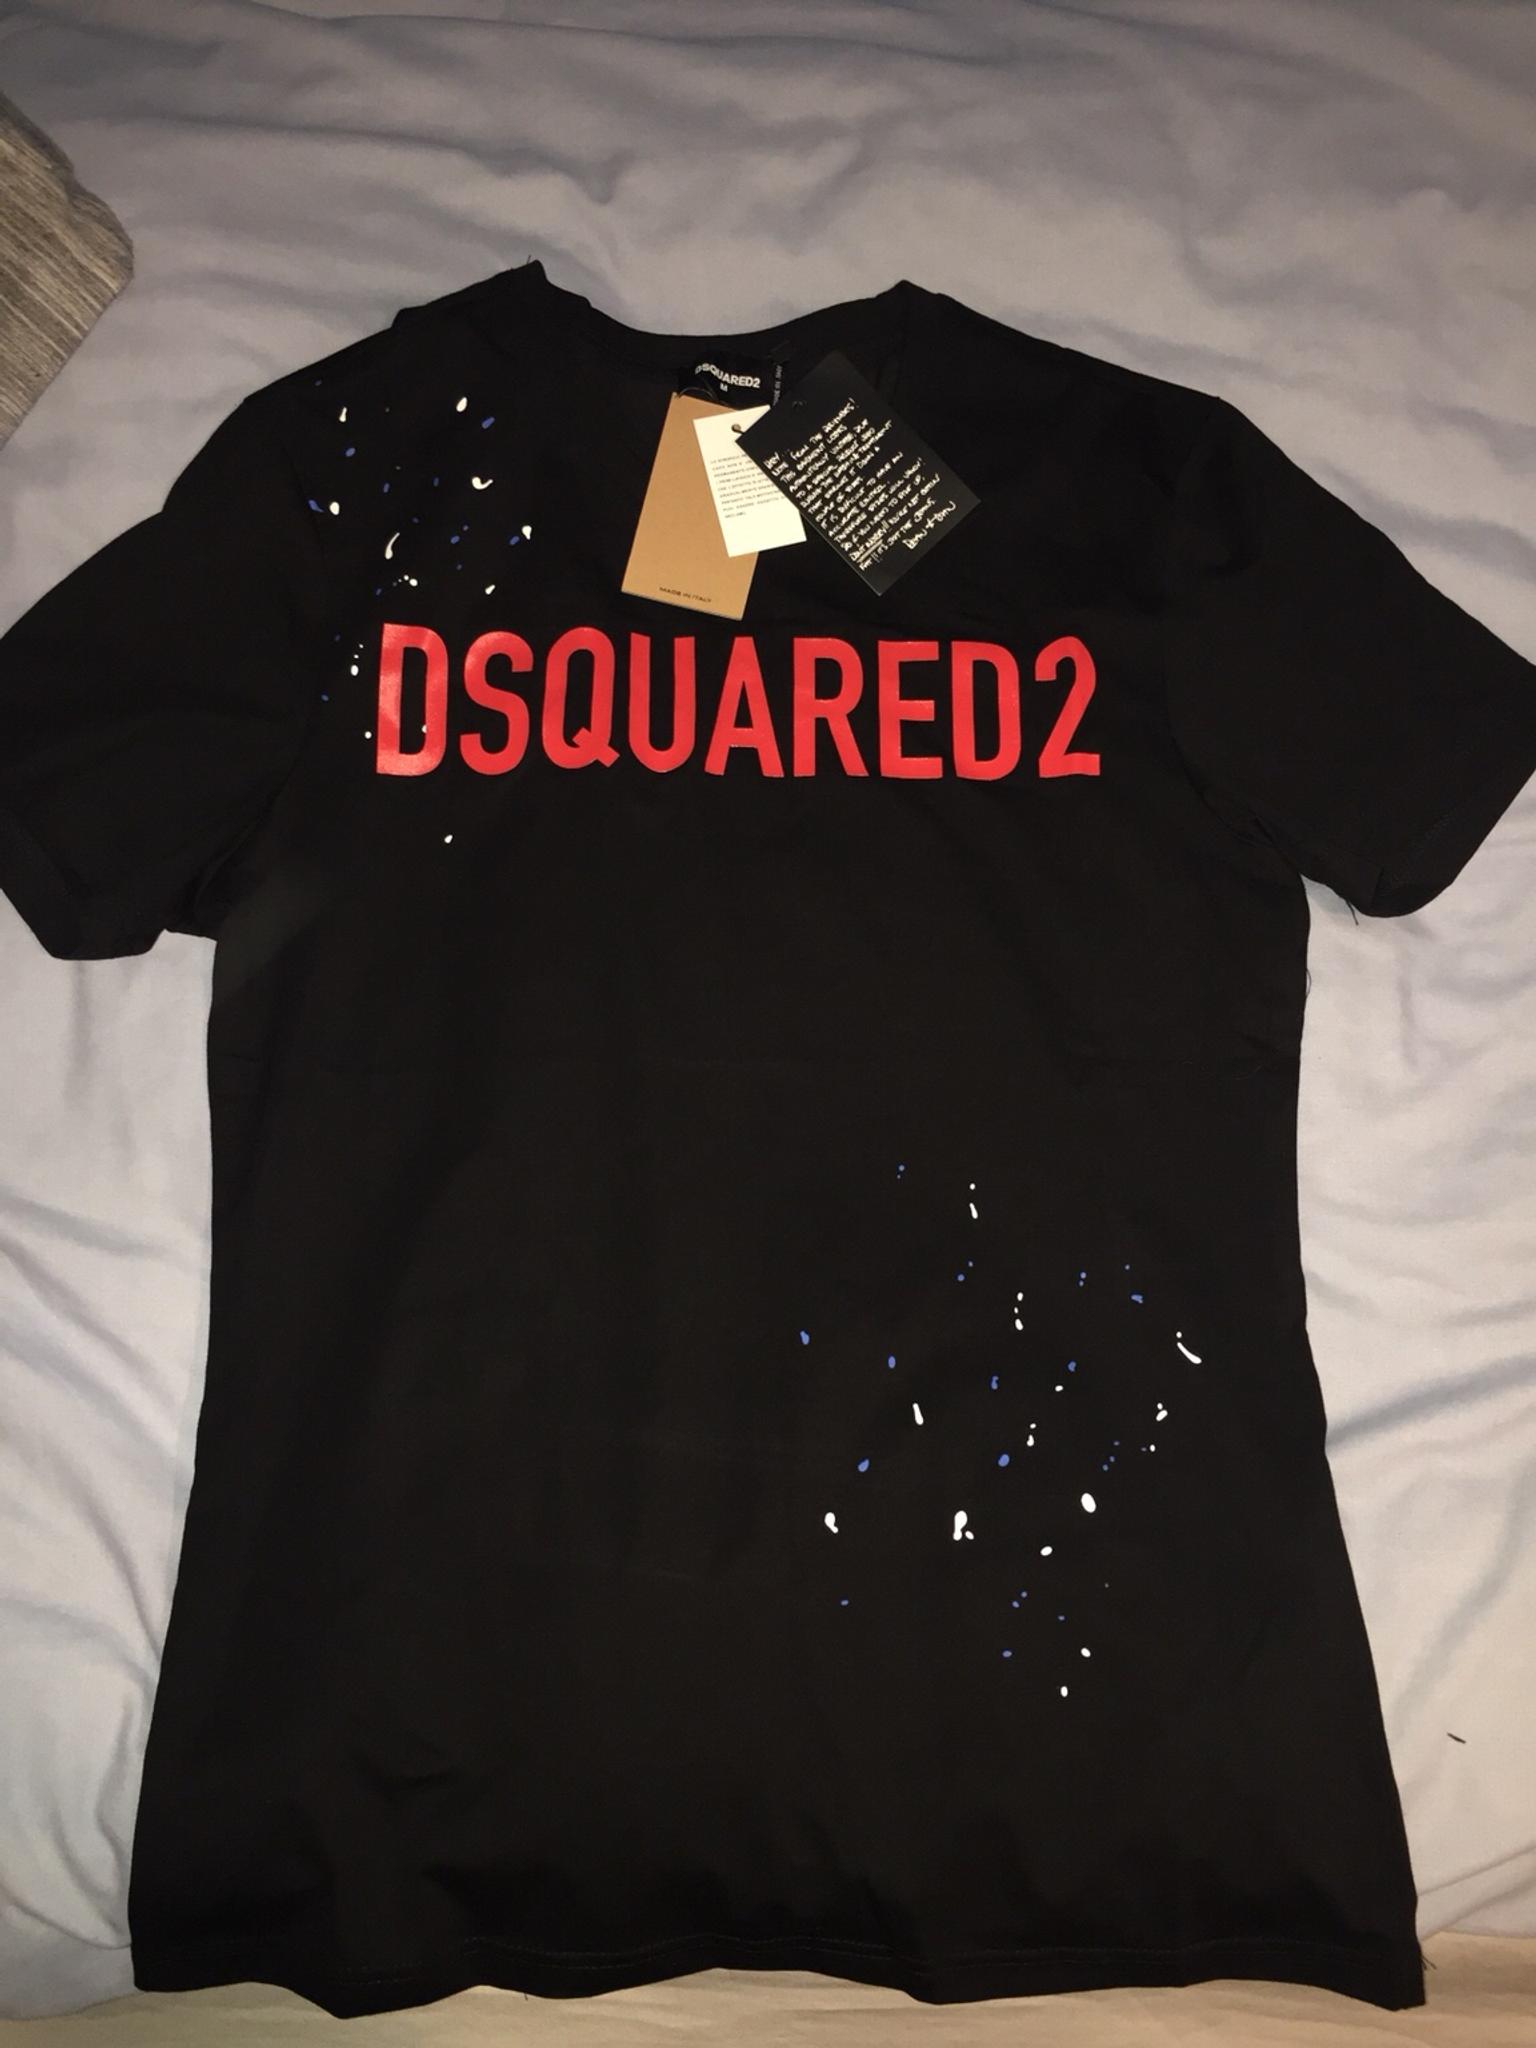 dsquared shirt size